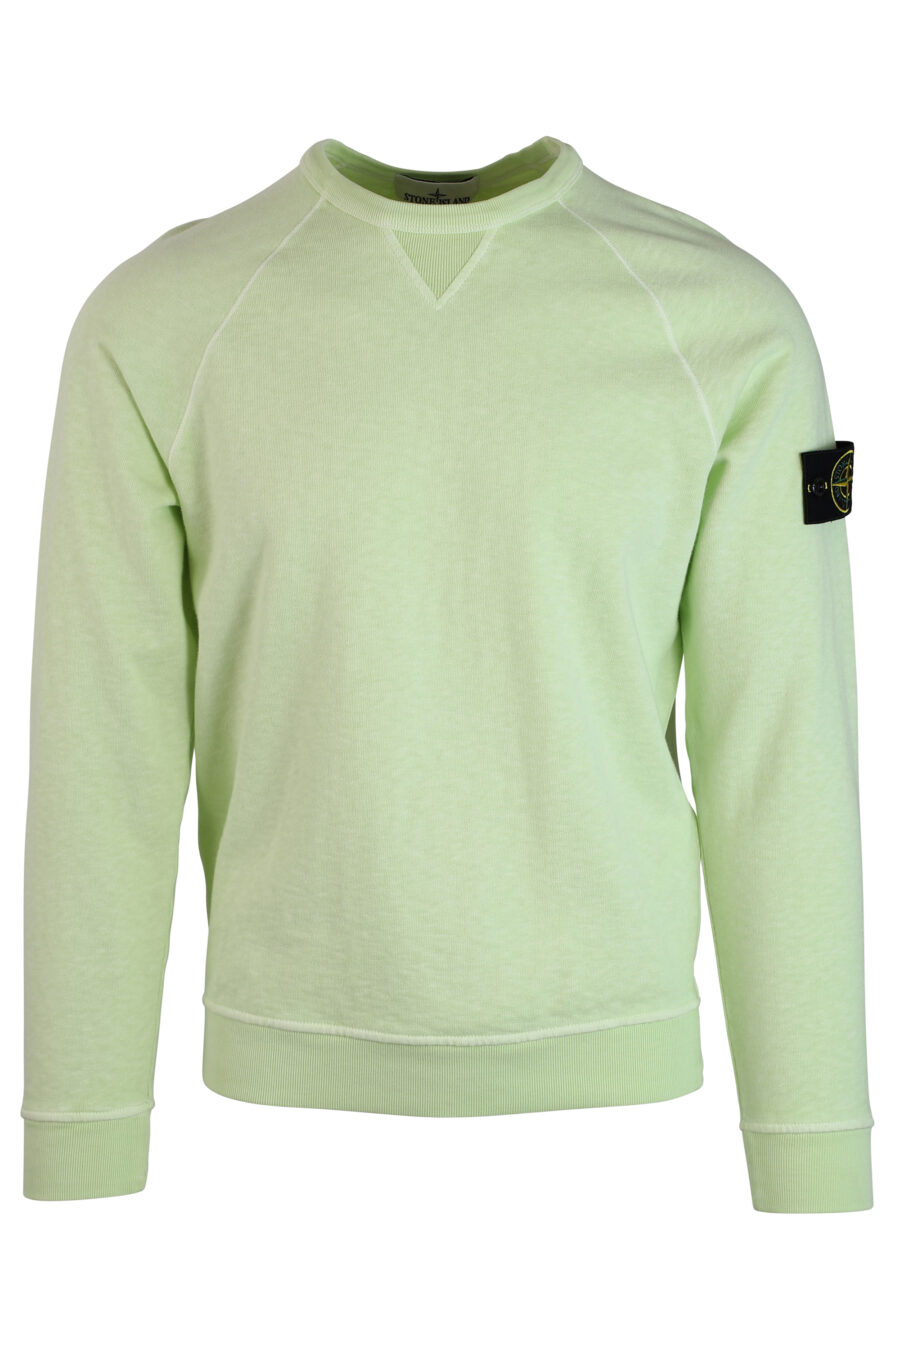 Camisola verde clara com remendo - IMG 0271